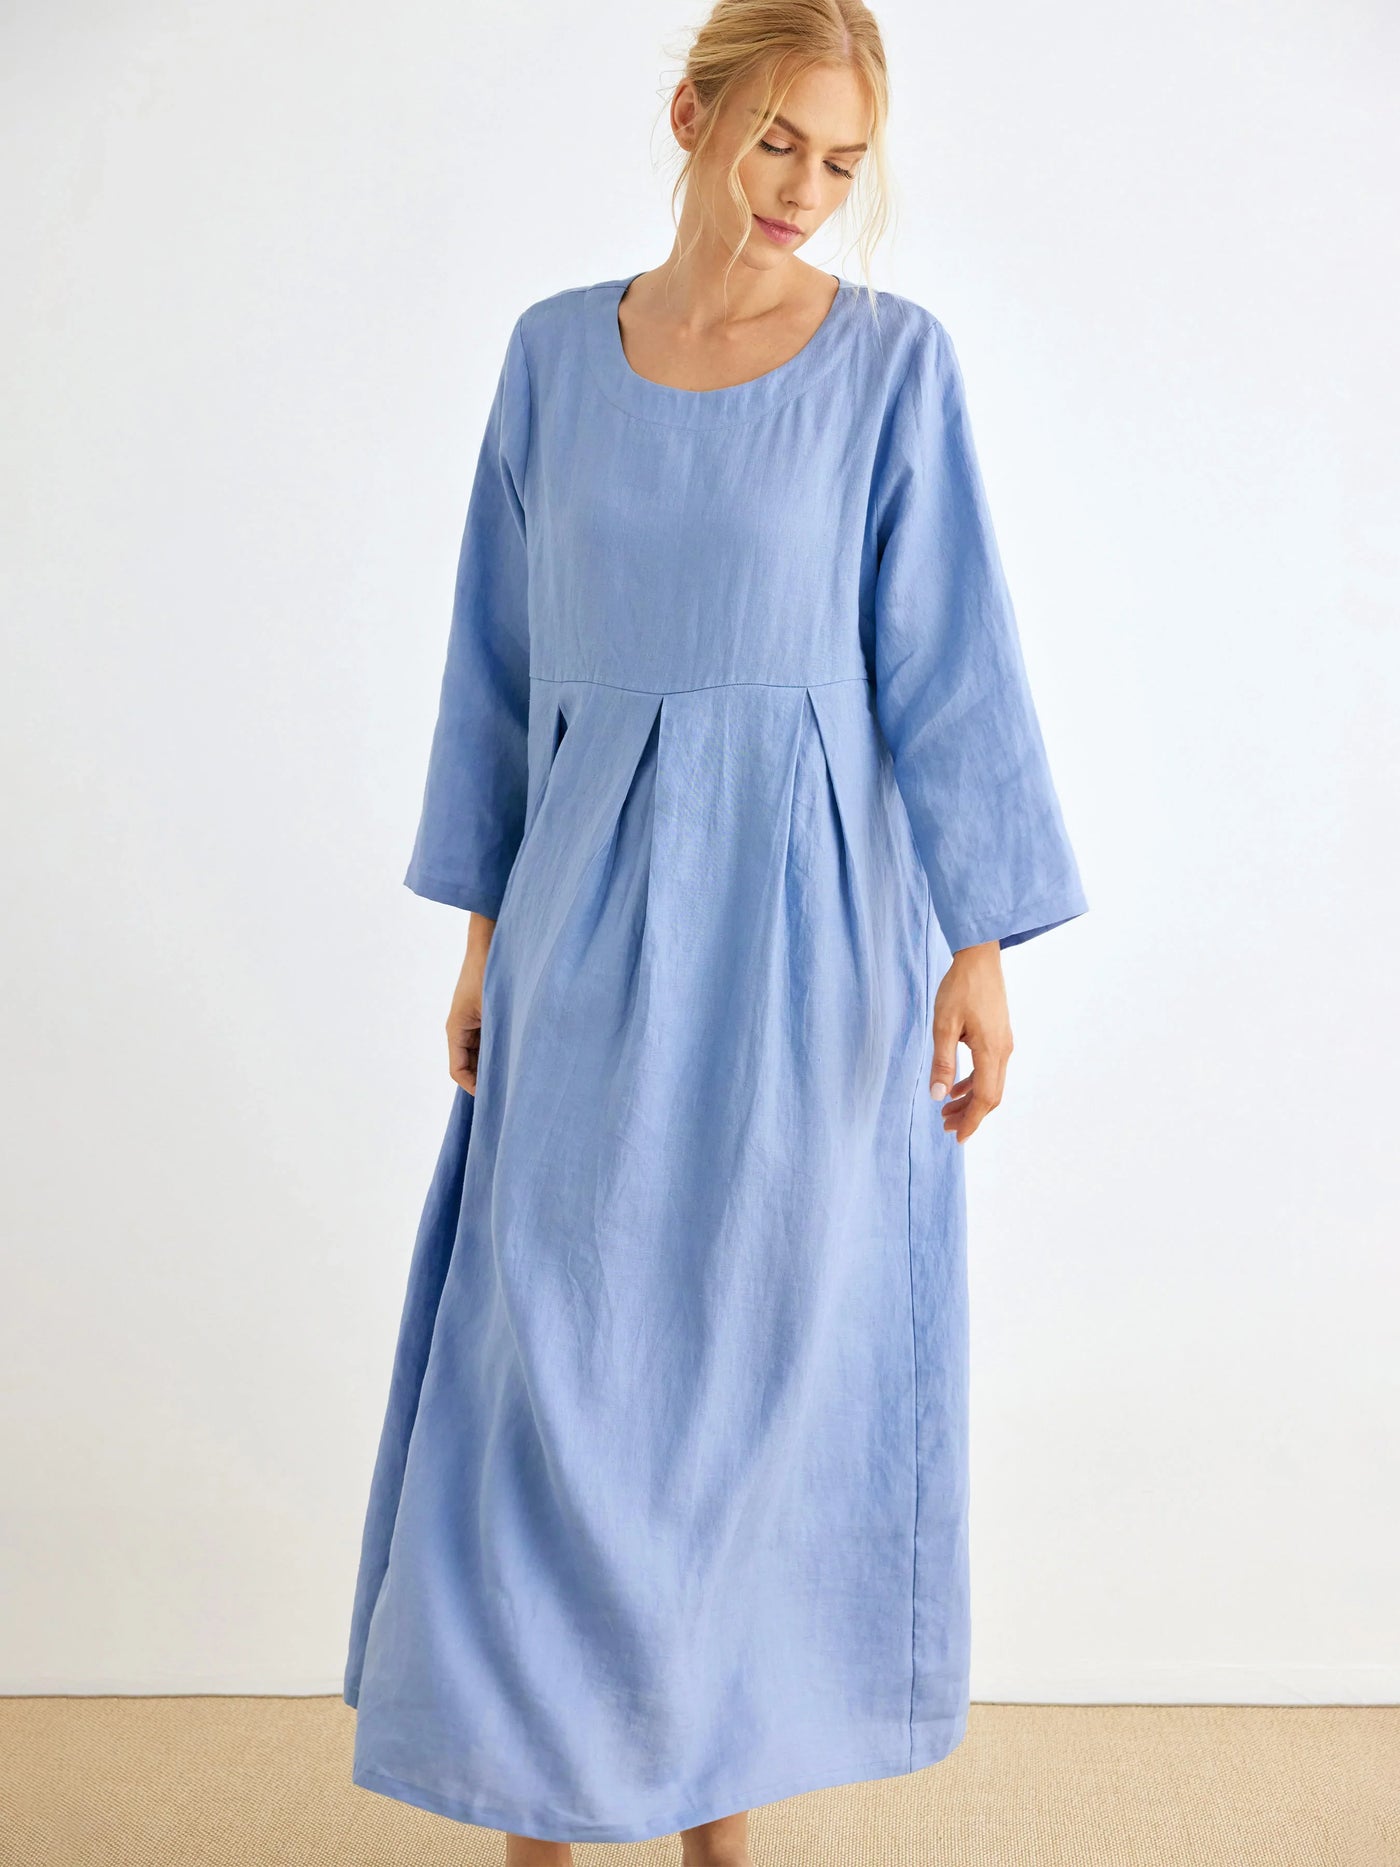 Blythe 100% Linen Maxi Dress